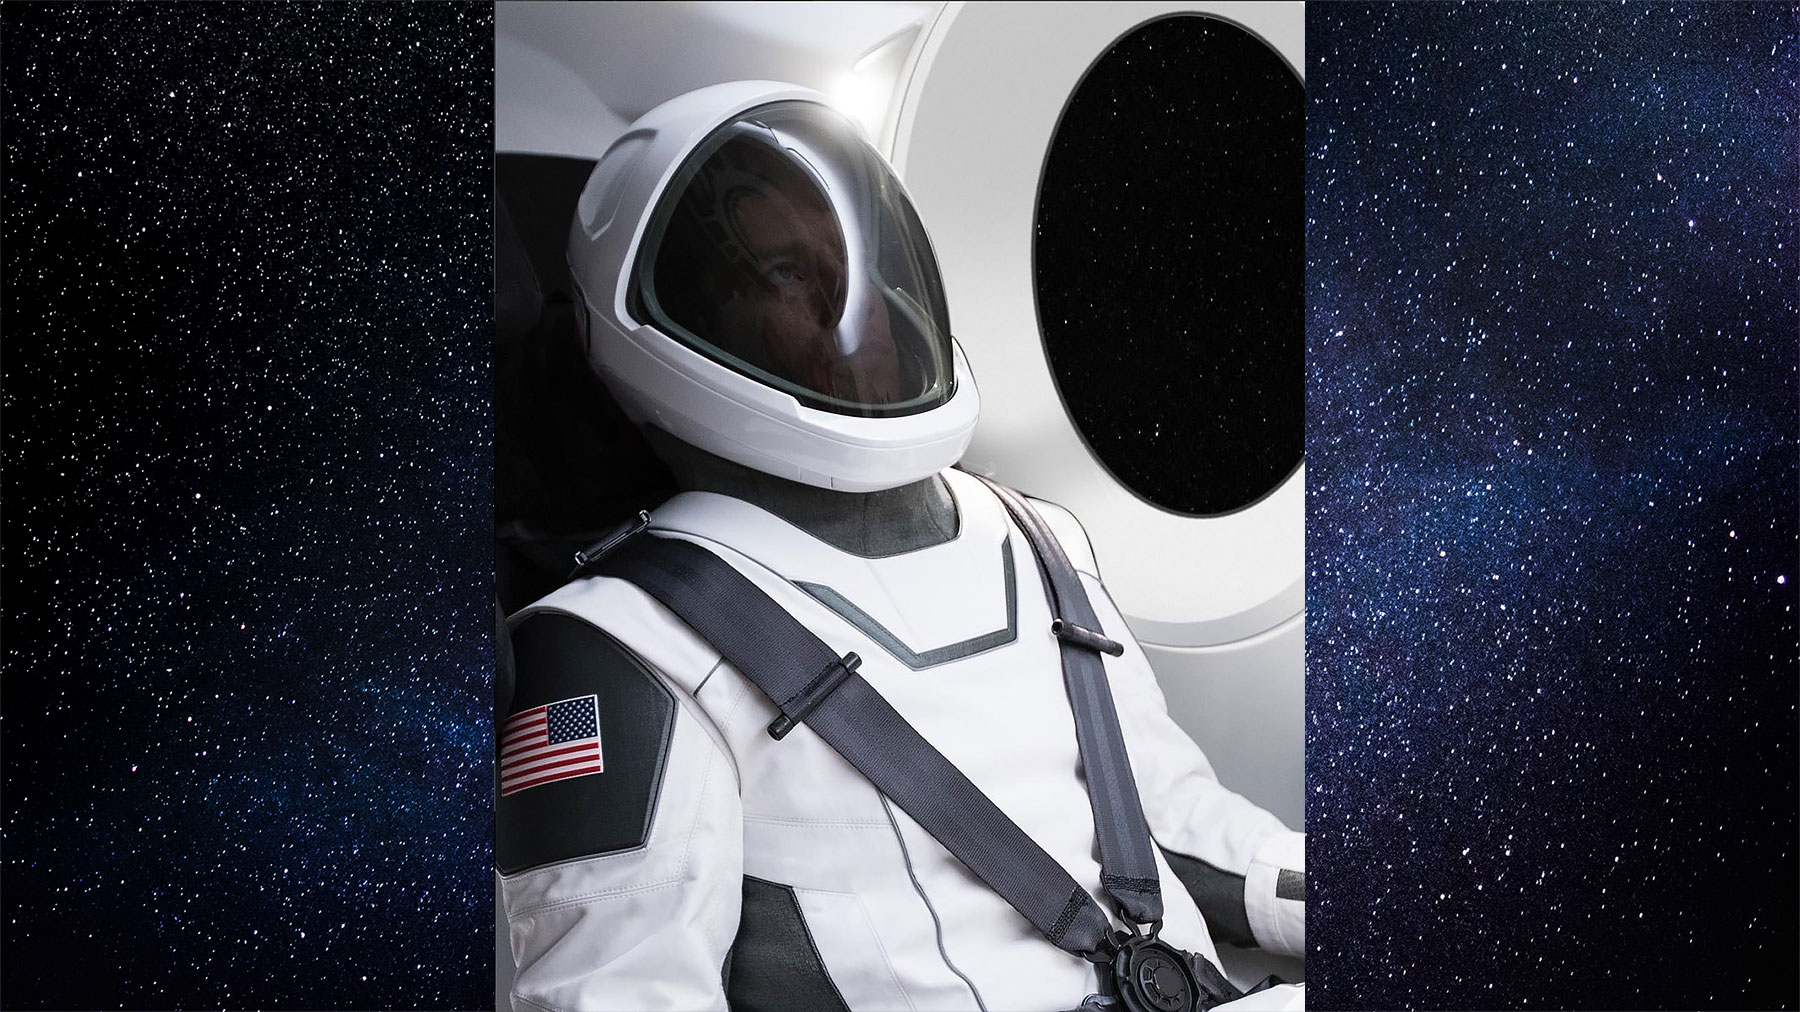 SpaceX flight suit.